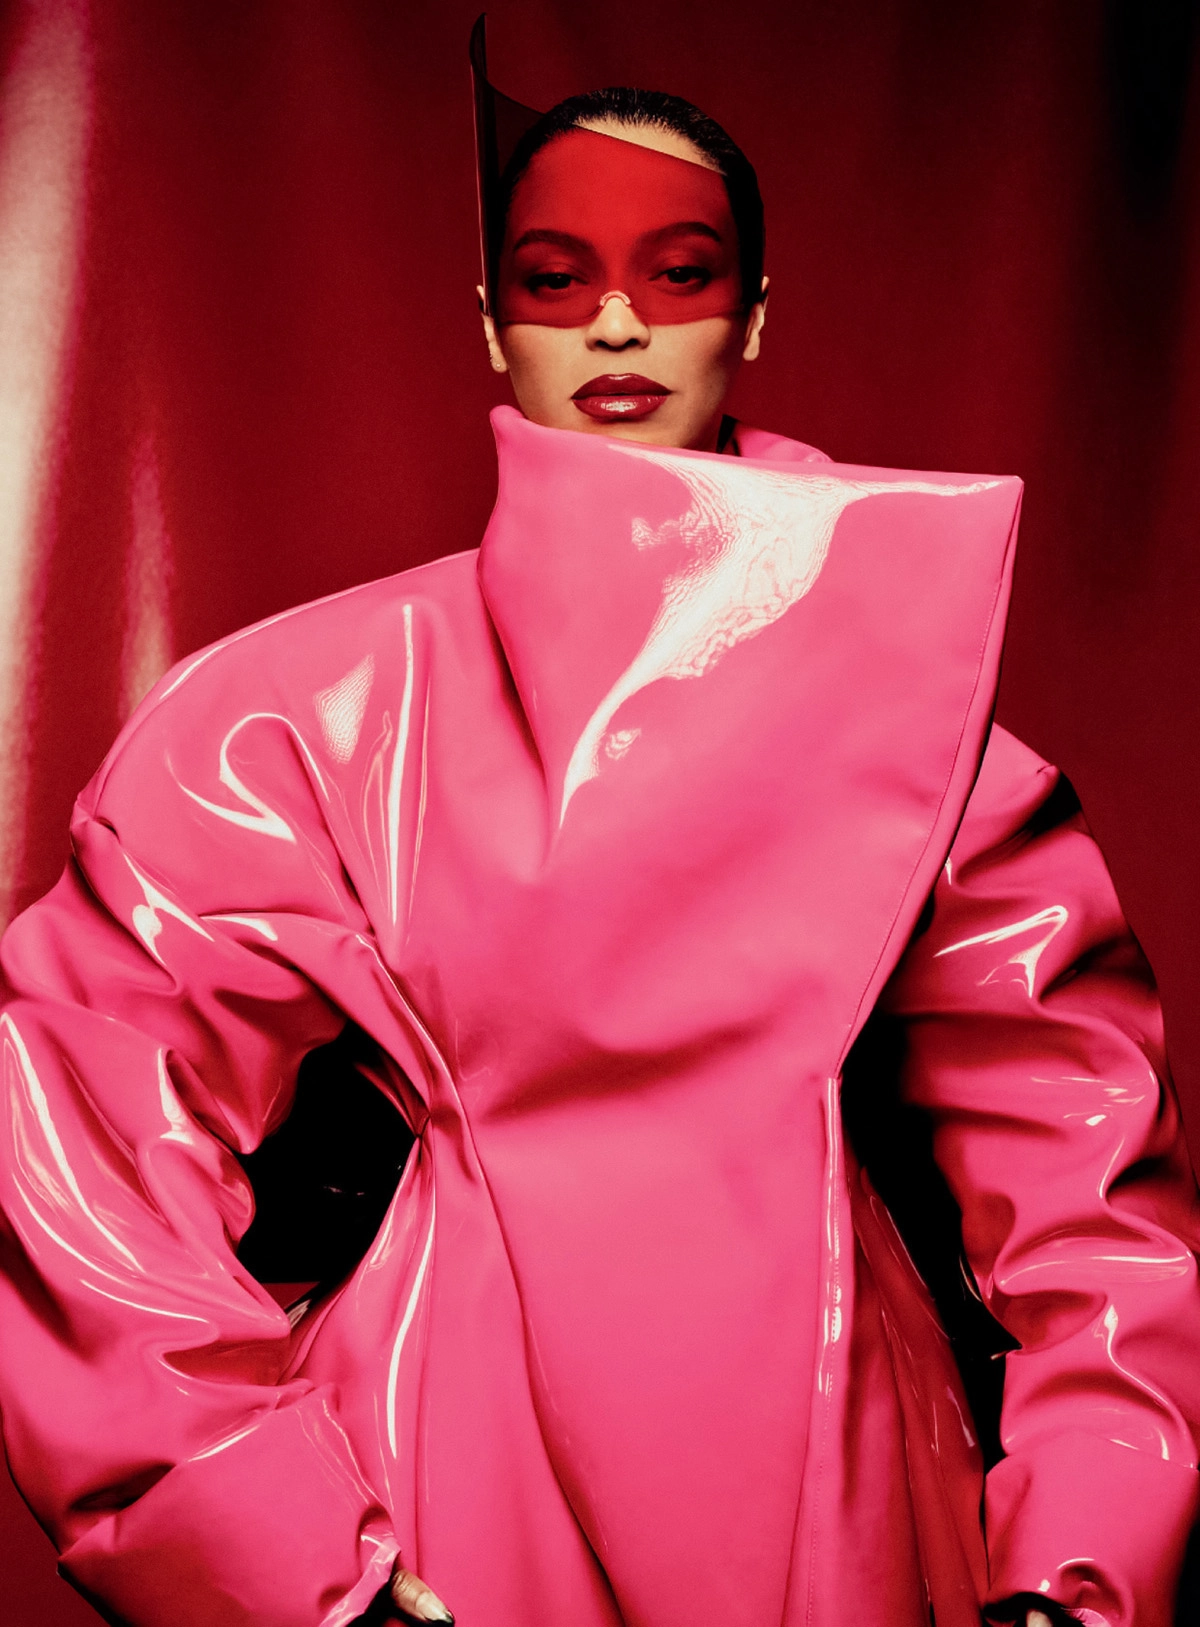 Beyoncé covers British Vogue July 2022 by Rafael Pavarotti